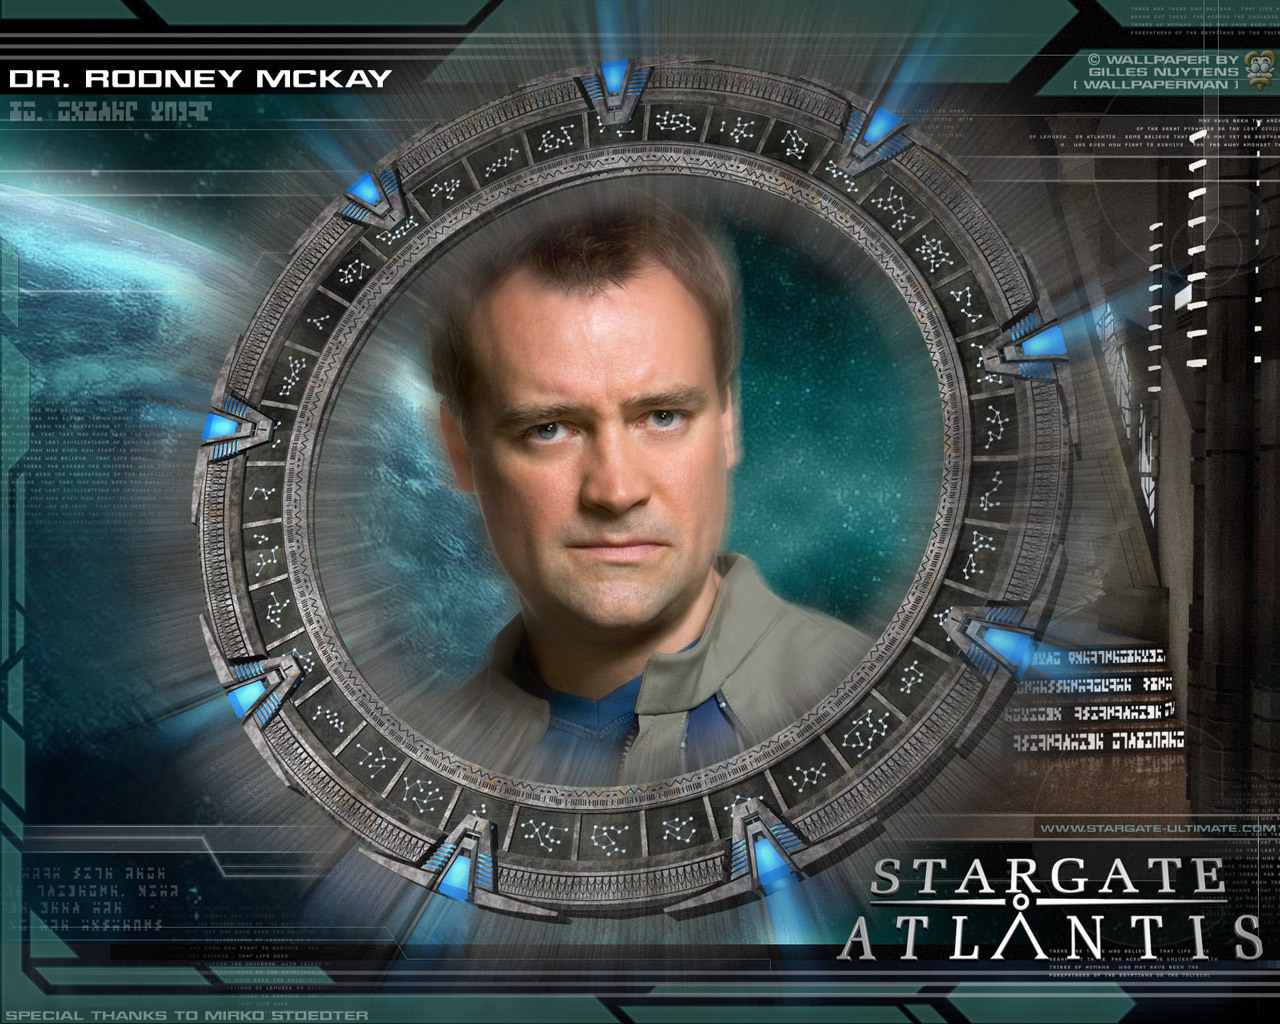 sga - Stargate: Atlantis Wallpaper (9111029) - Fanpop